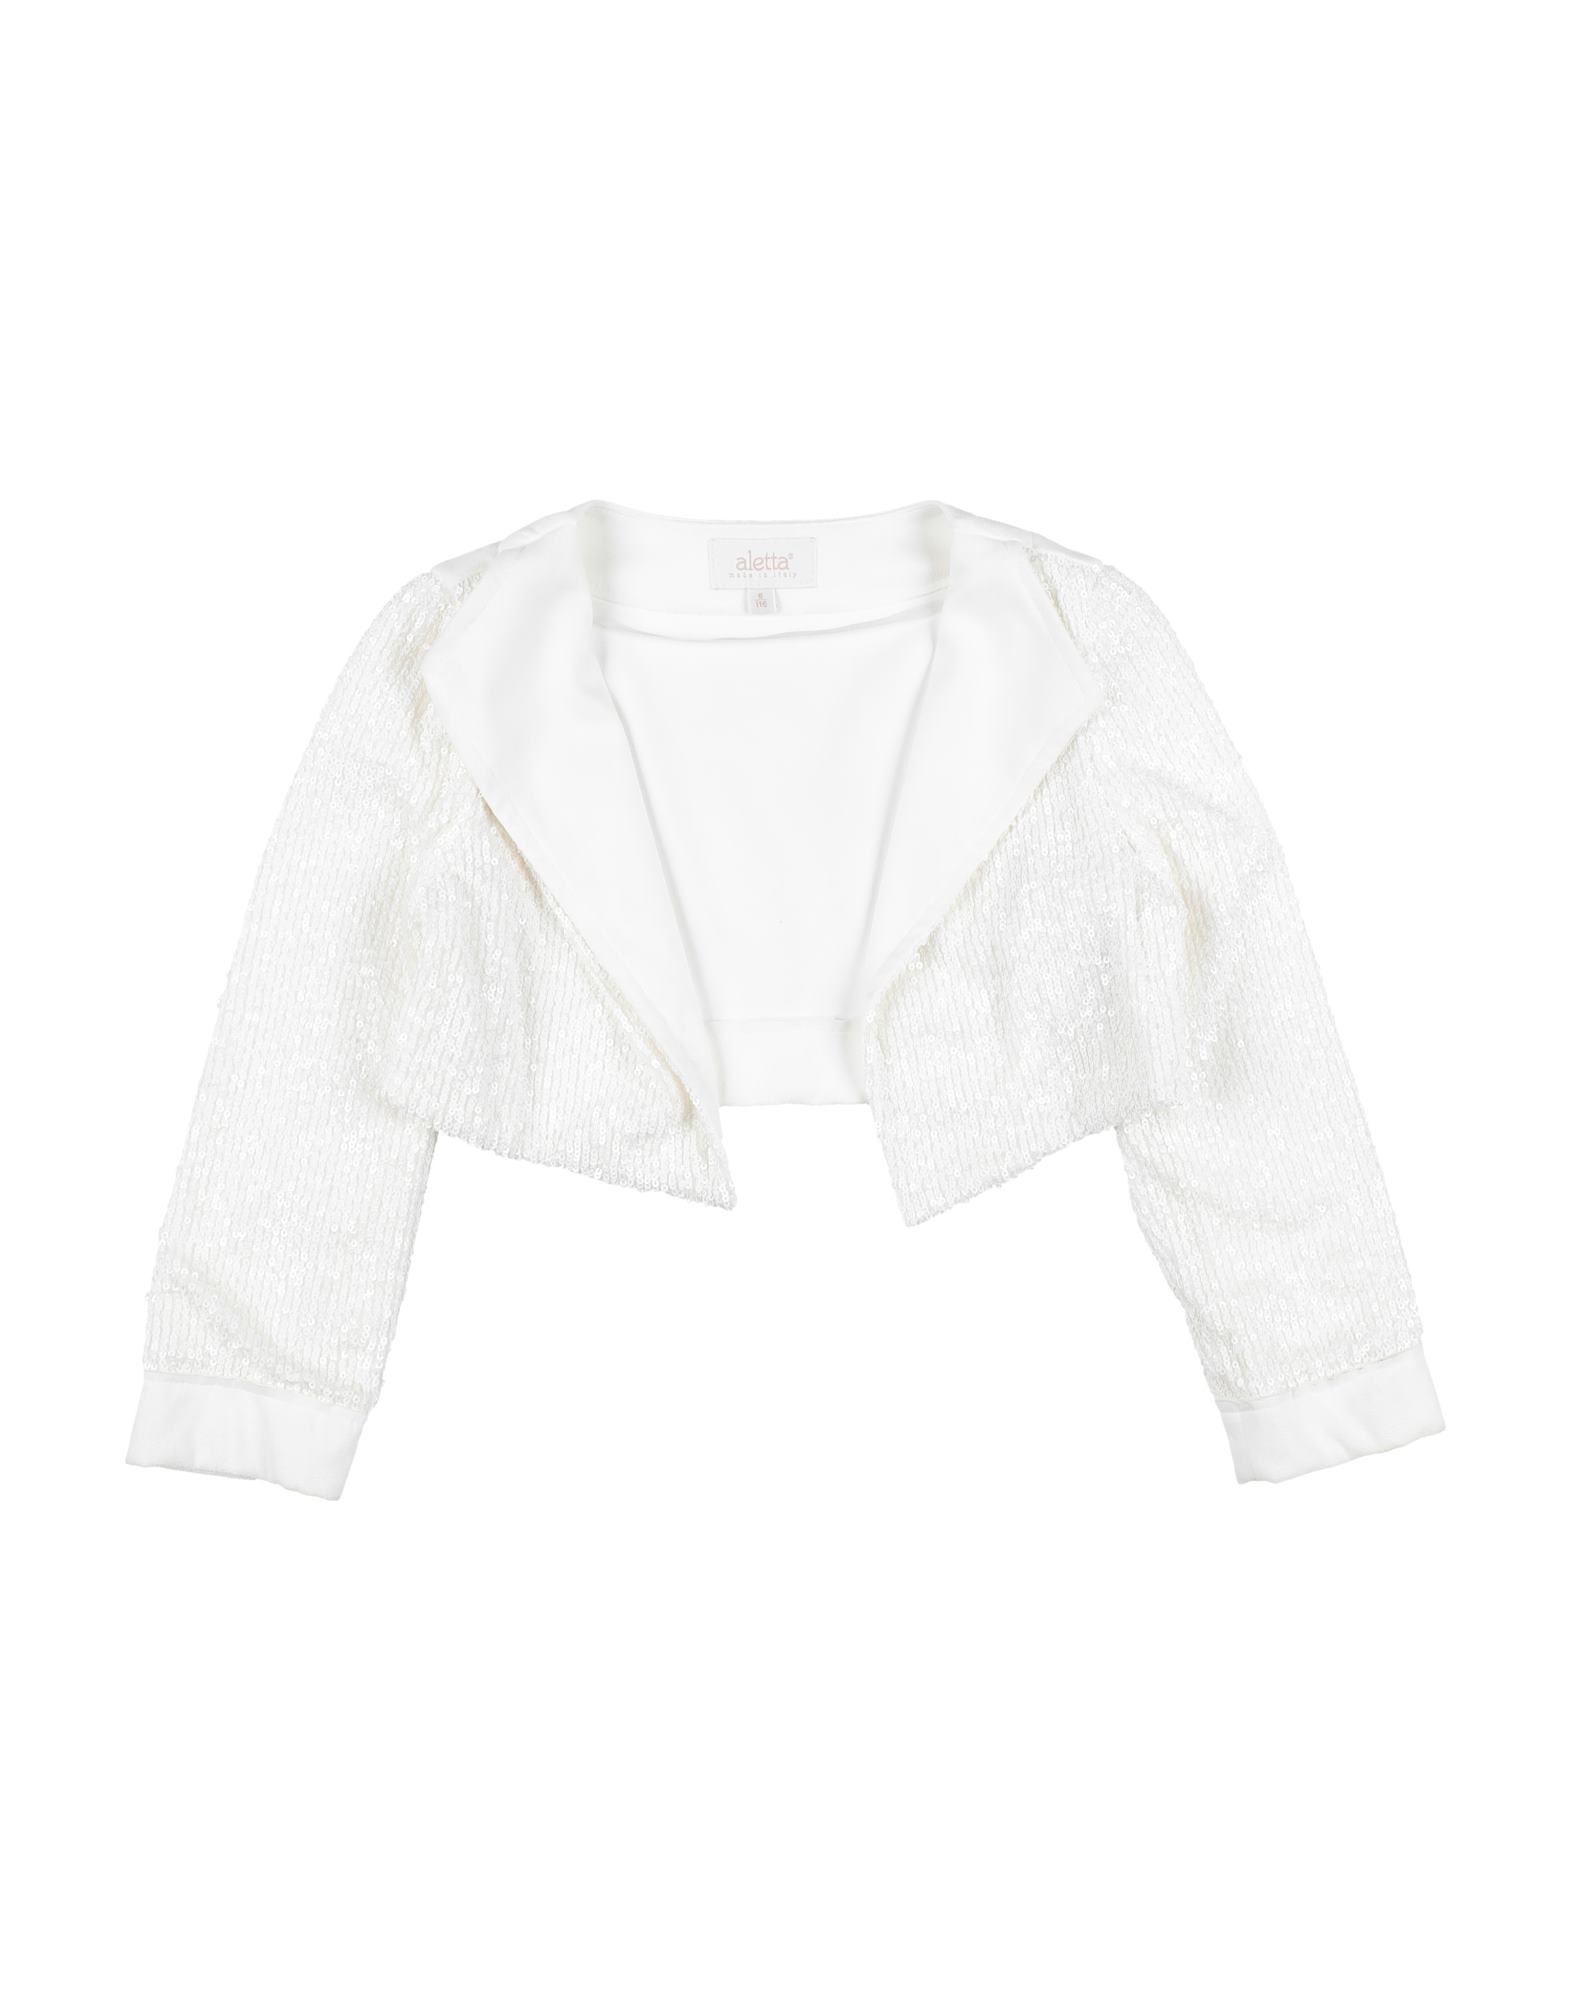 Aletta Suit Jackets In White